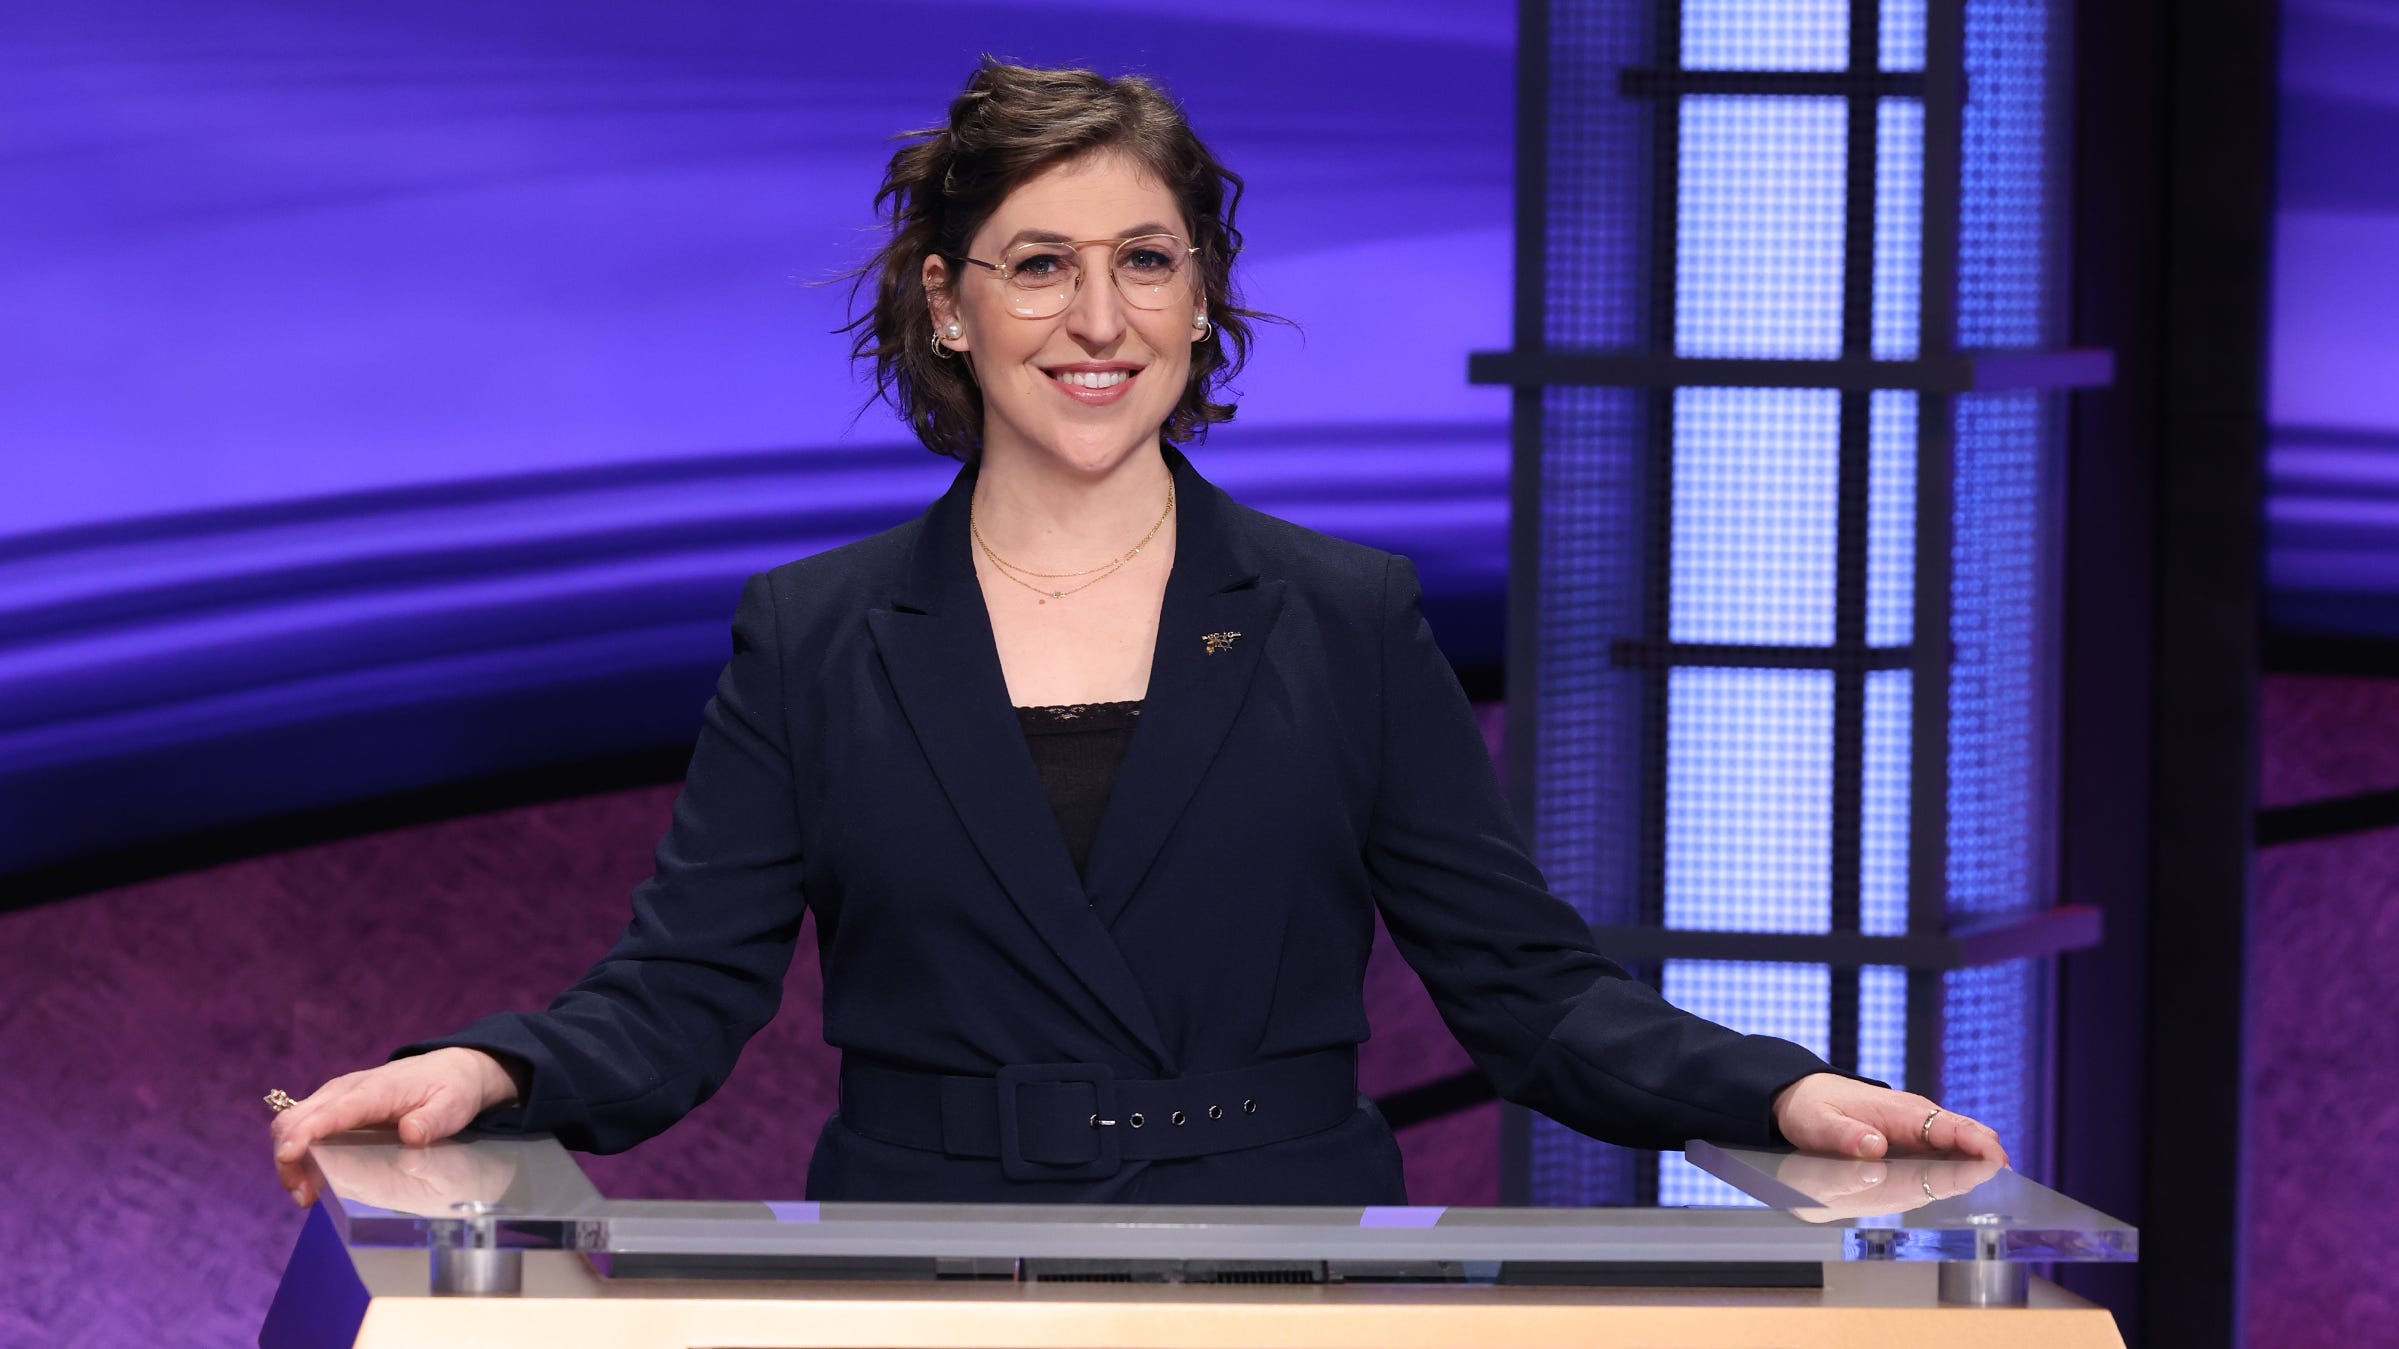 Mayim Bialik's two-week turn as "Jeopardy!" host kicks off Monday, May 31.